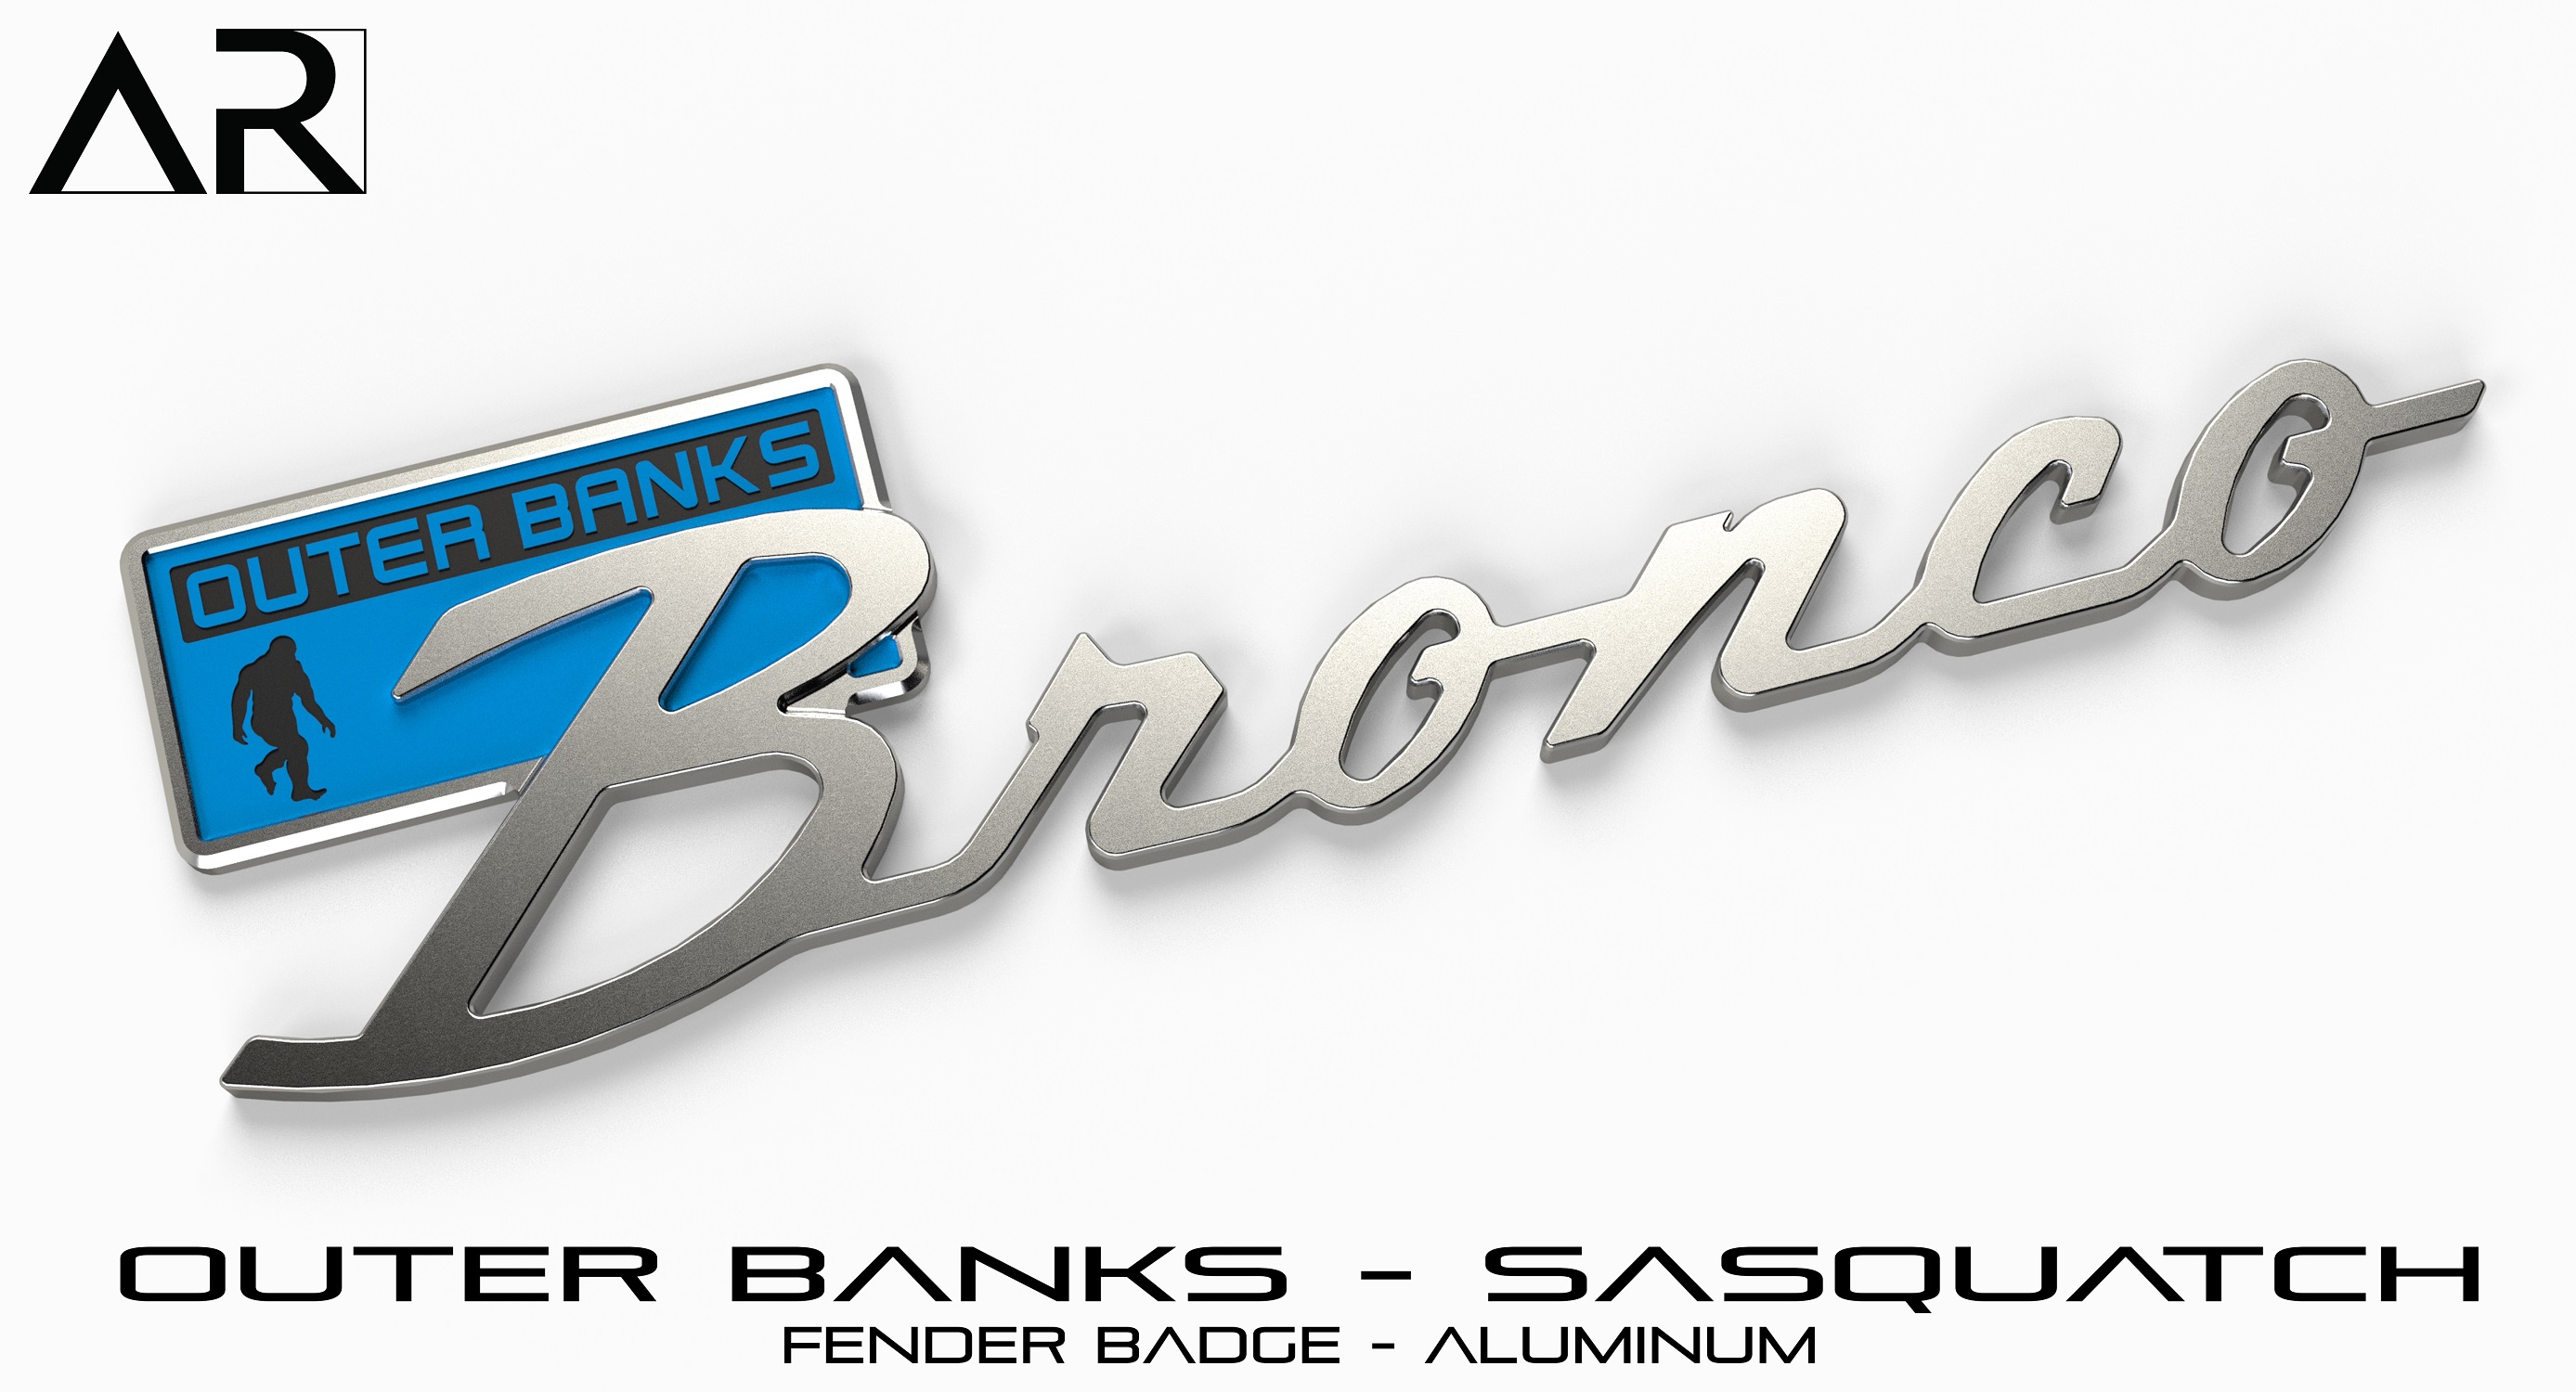 Ford Bronco AR | BRONCO CLASSIC DNA Fender Badge 1601006_S  - Fender Badge  - Outer Banks Sasquatch - Aluminum